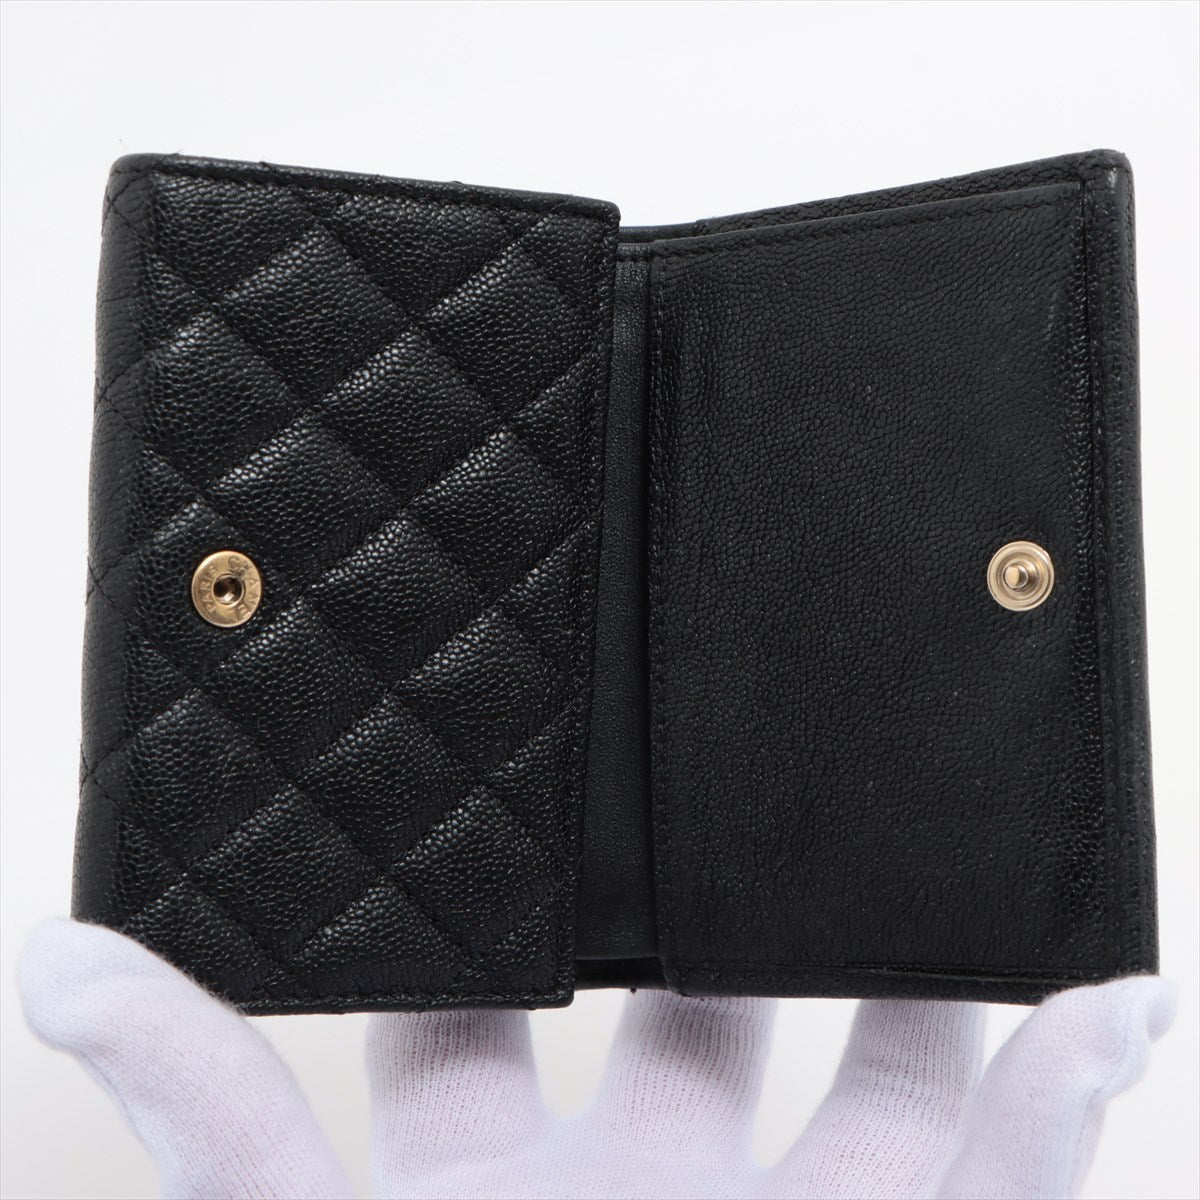 Chanel Boy Chanel Caviarskin Compact Wallet Black Gold Metal fittings 30